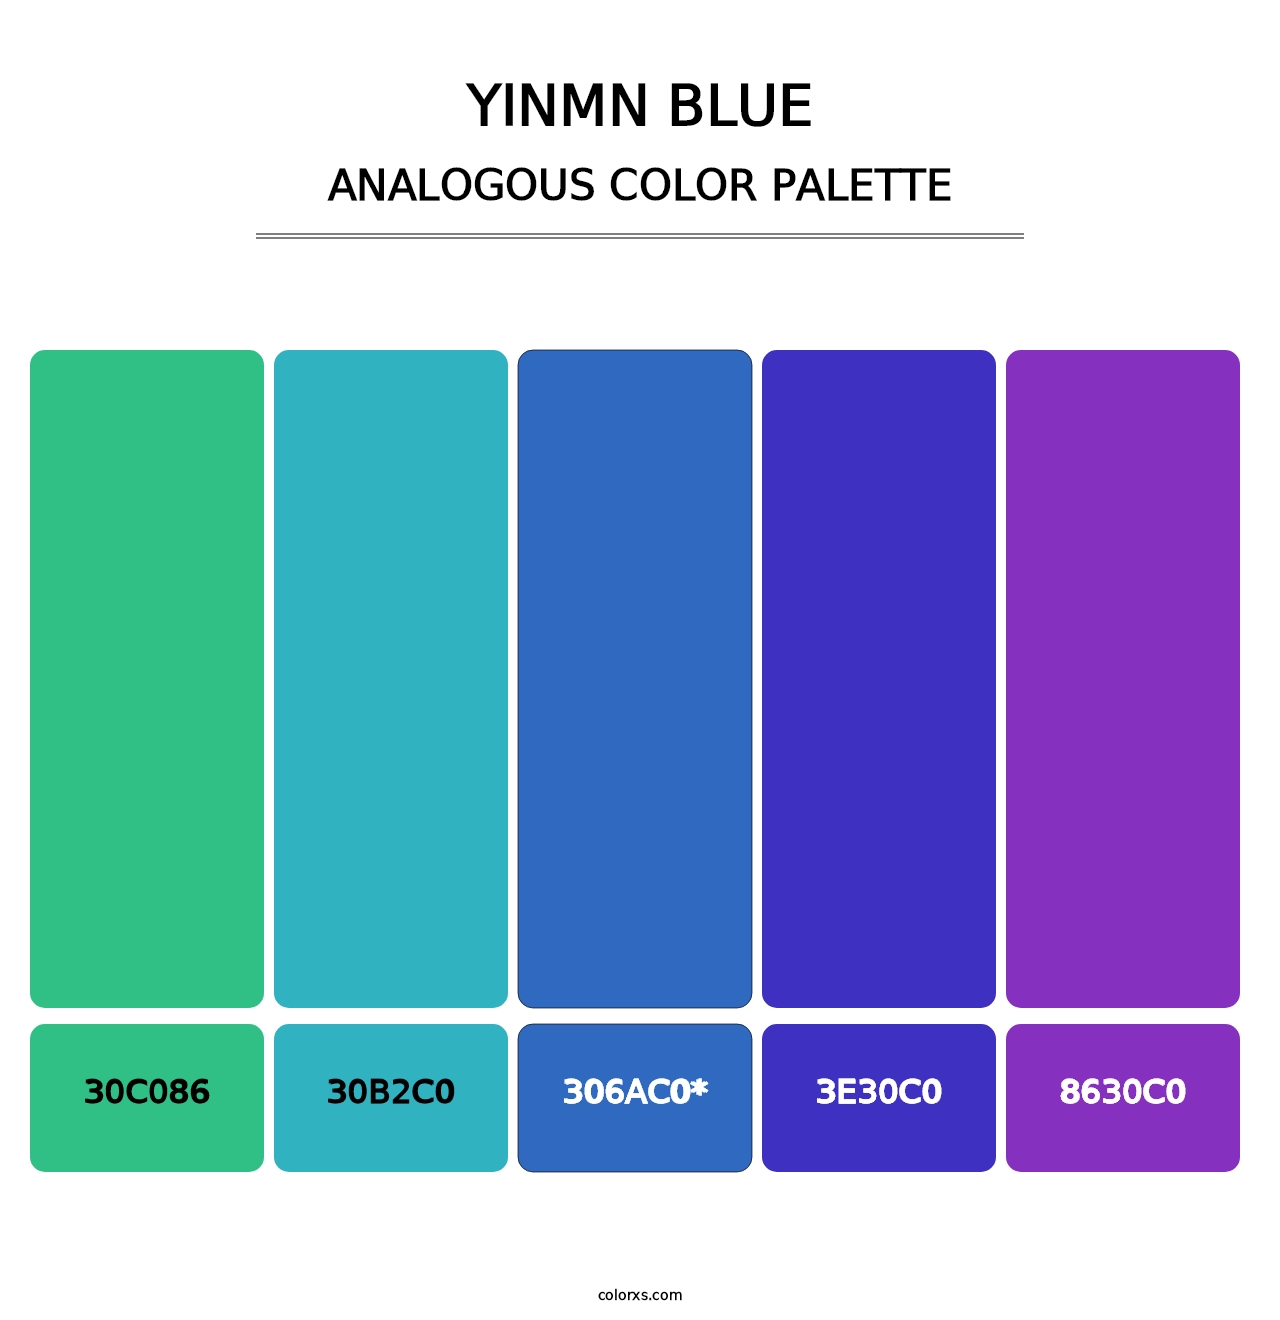 YInMn Blue - Analogous Color Palette